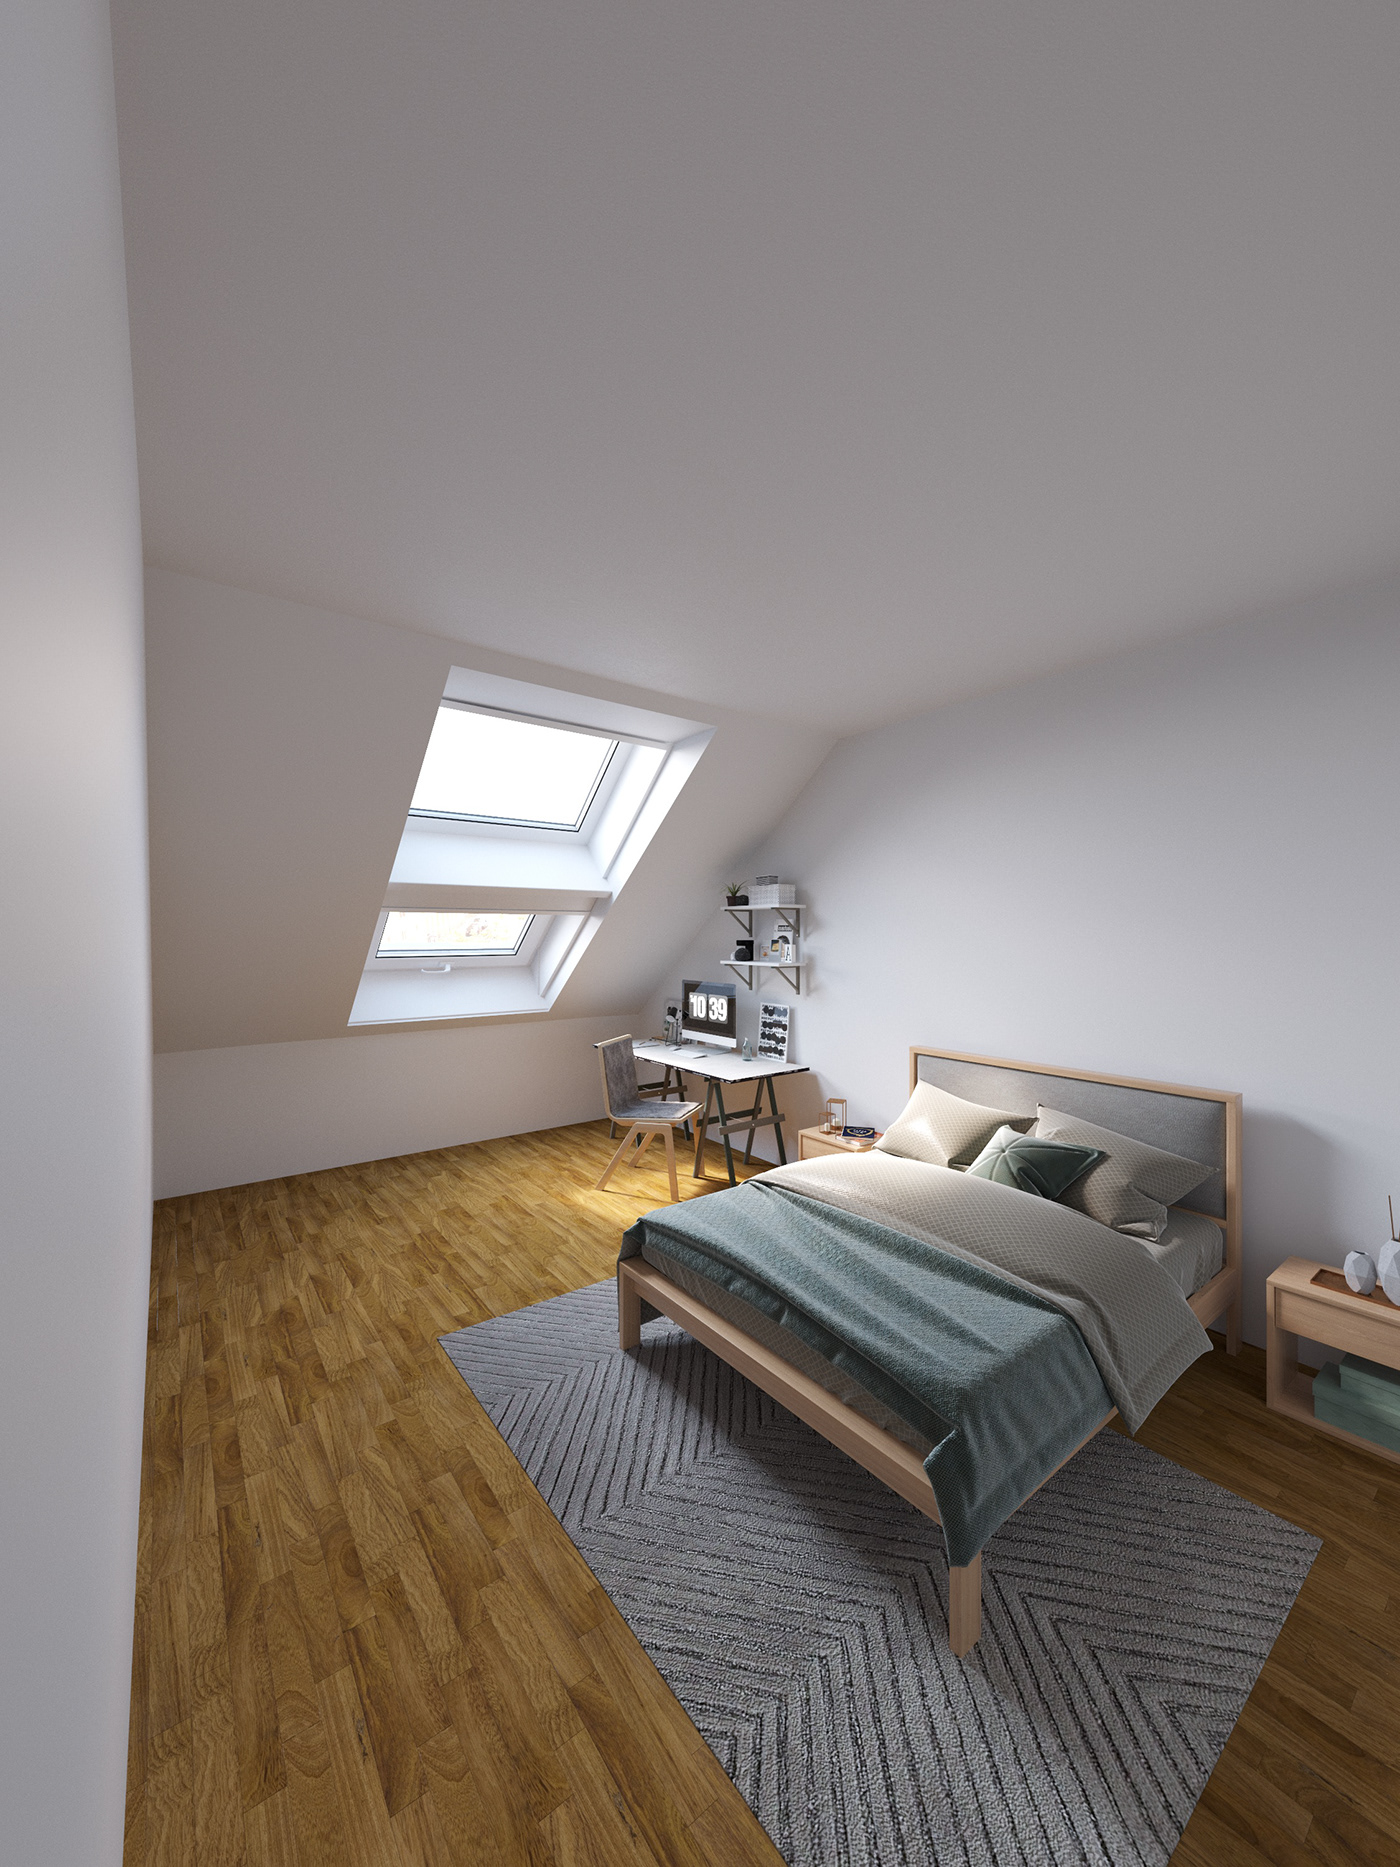 3ds max apartments architecture austria CGI design Interior Render vienna visualization